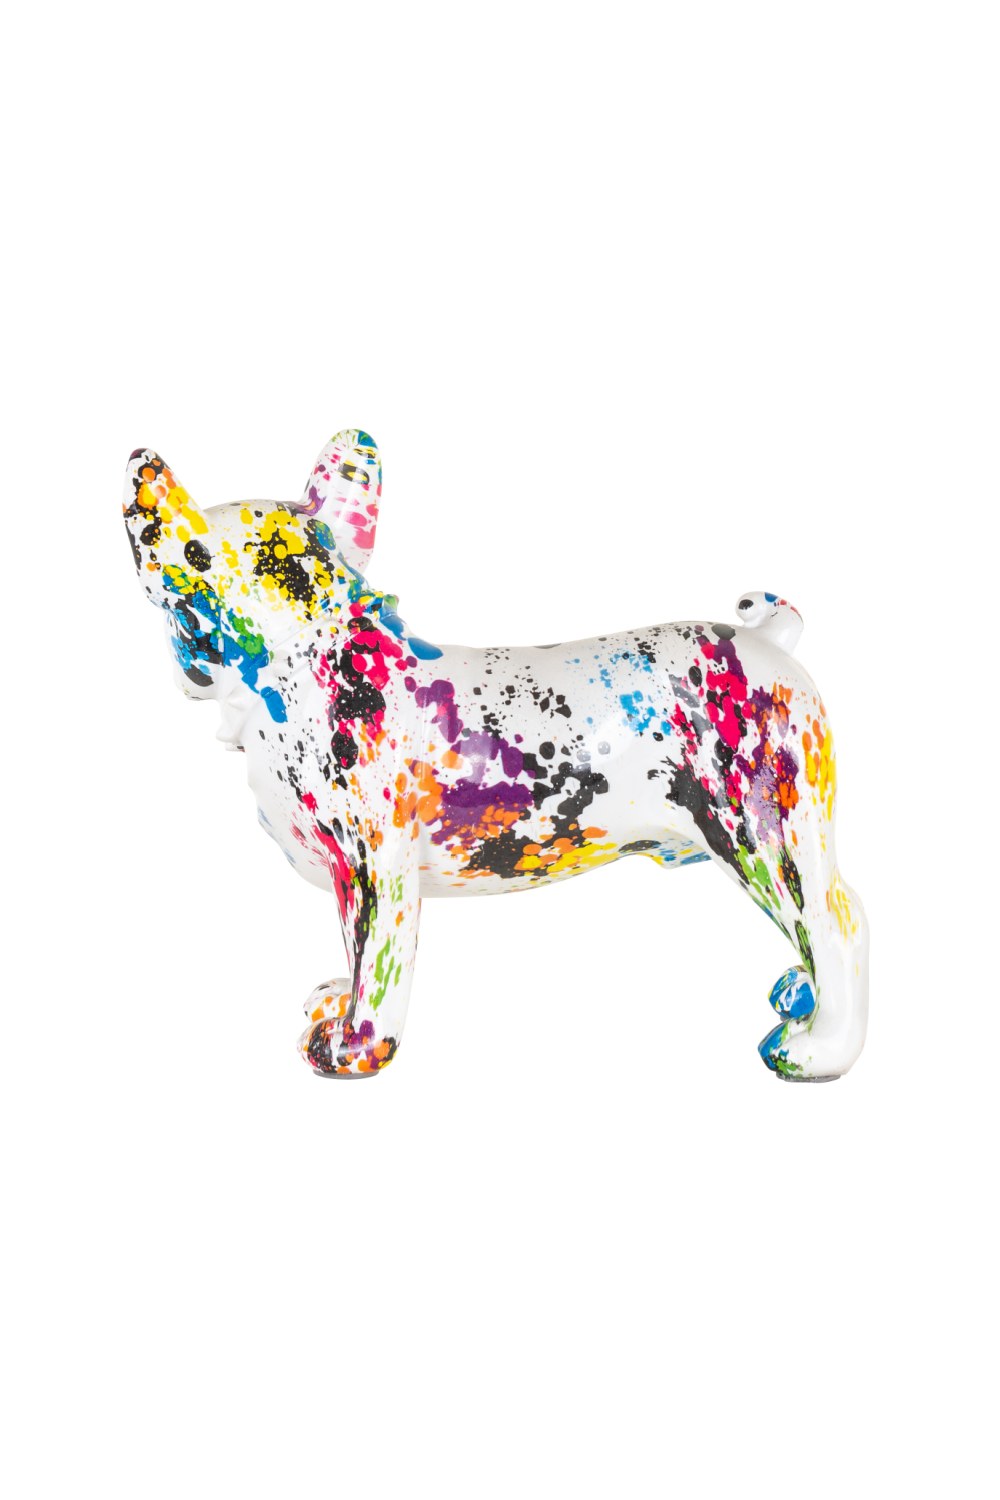 Multicolored Animal Deco Object | OROA Dog Graffiti | OROA.com